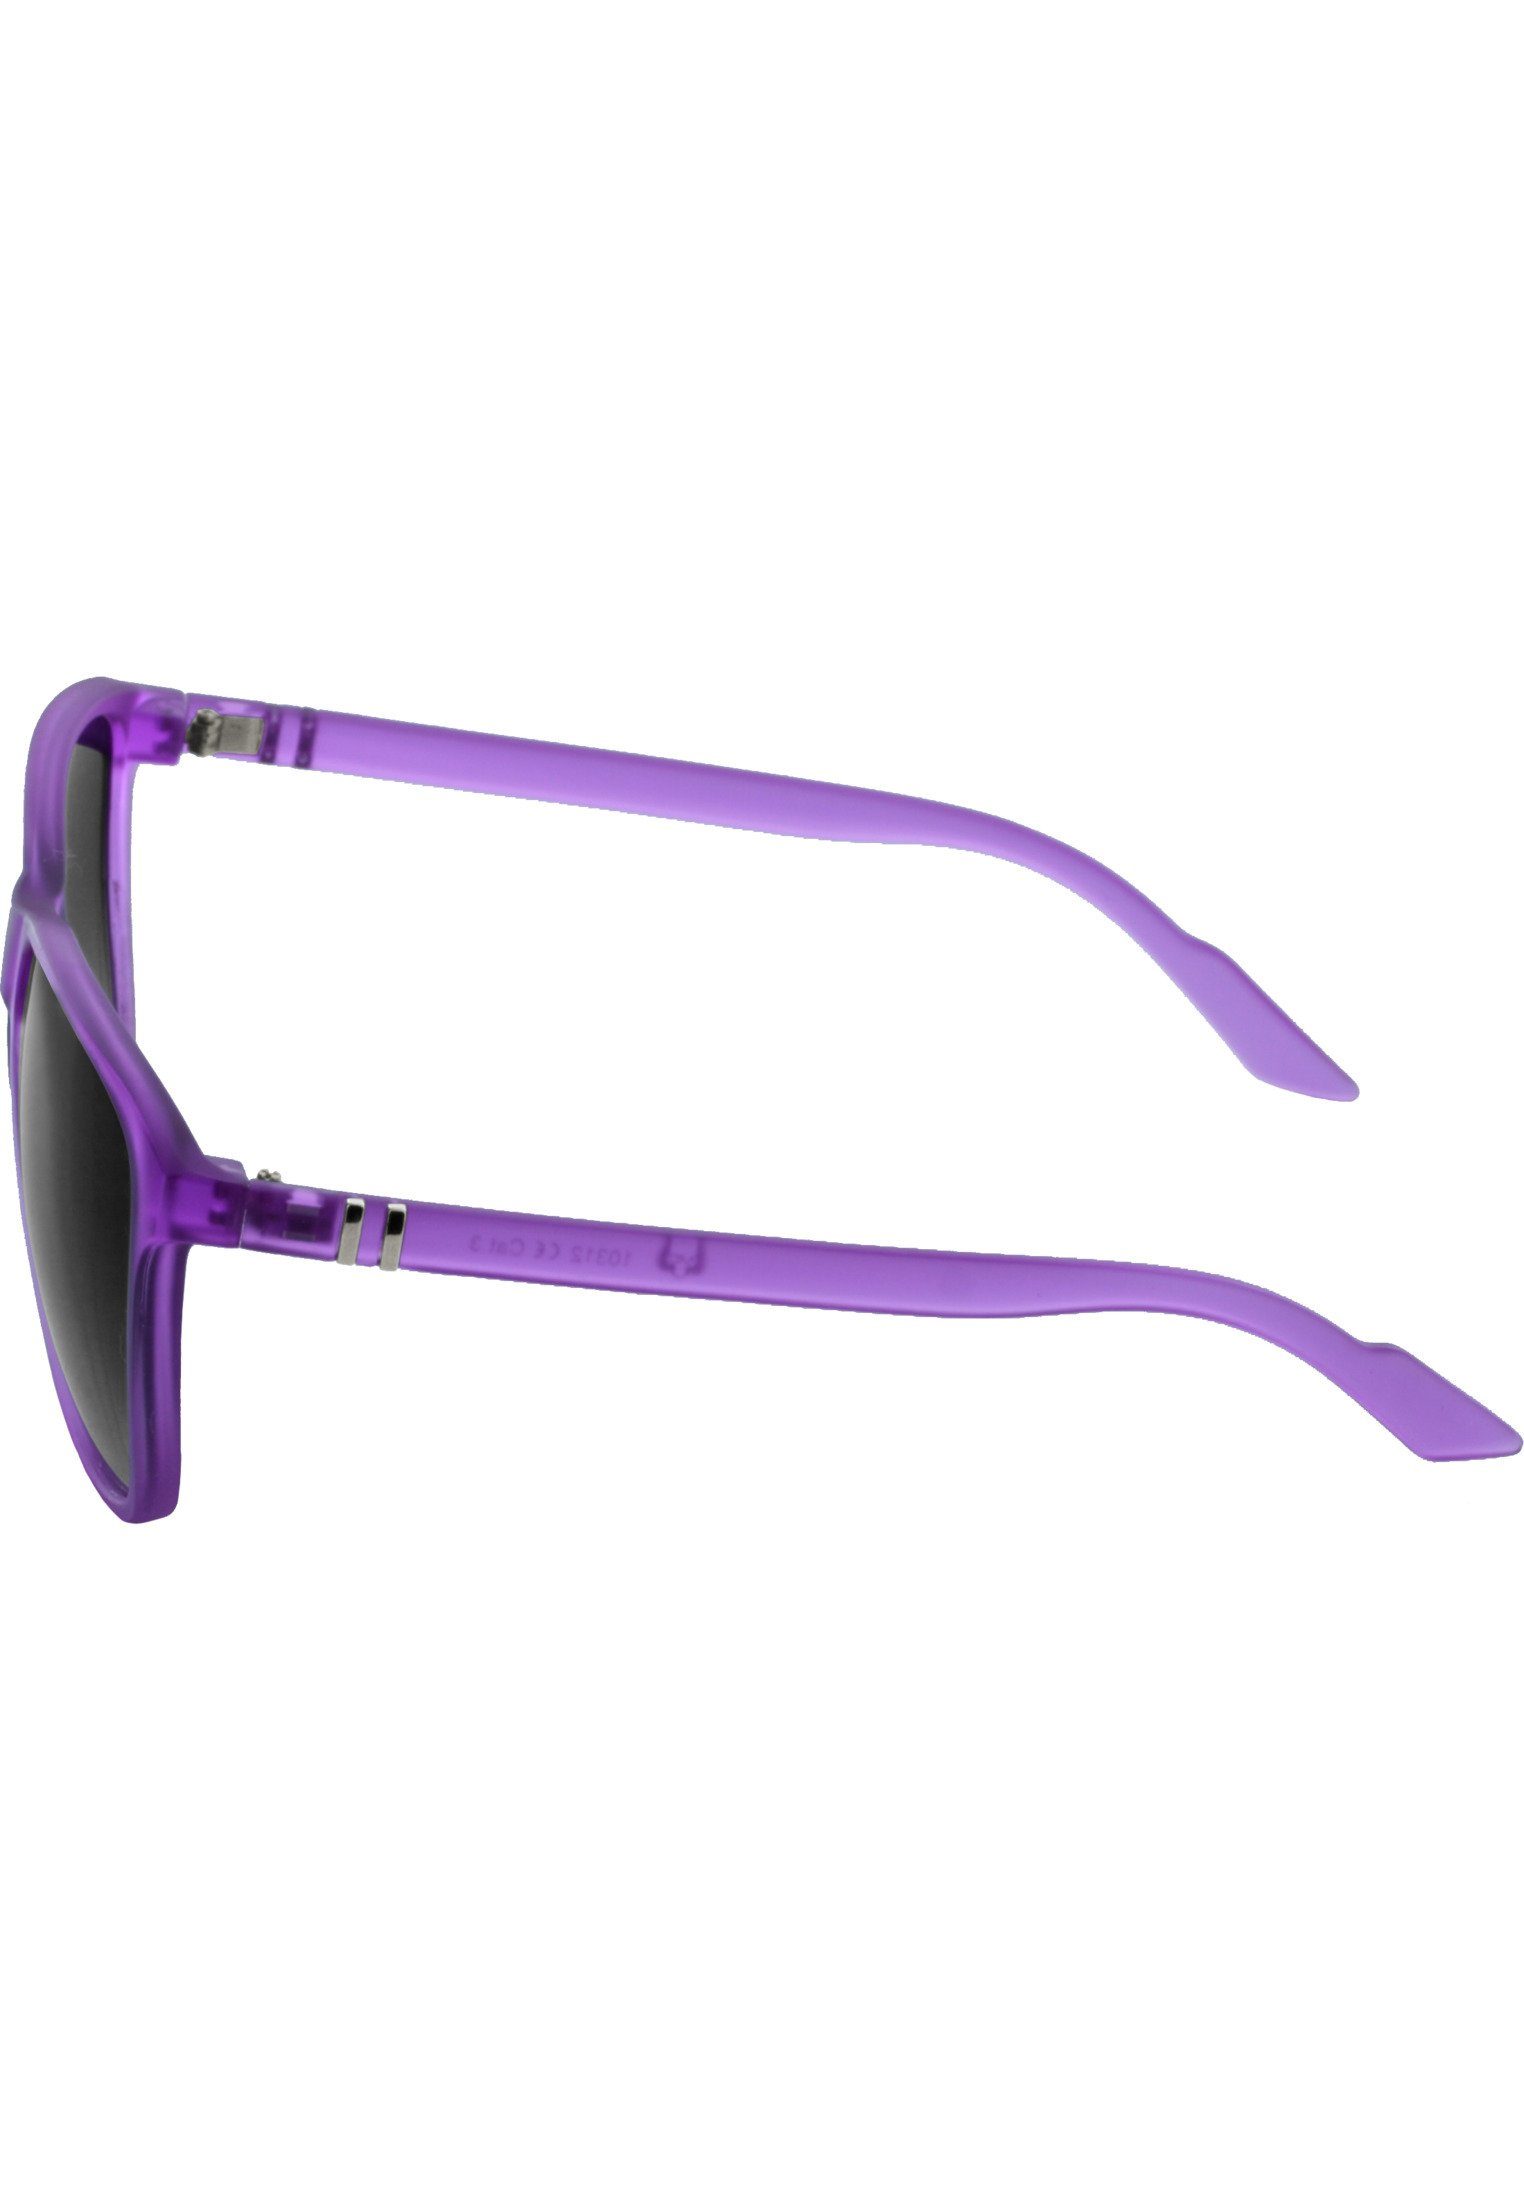 MSTRDS Sonnenbrille Chirwa purple Sunglasses Accessoires